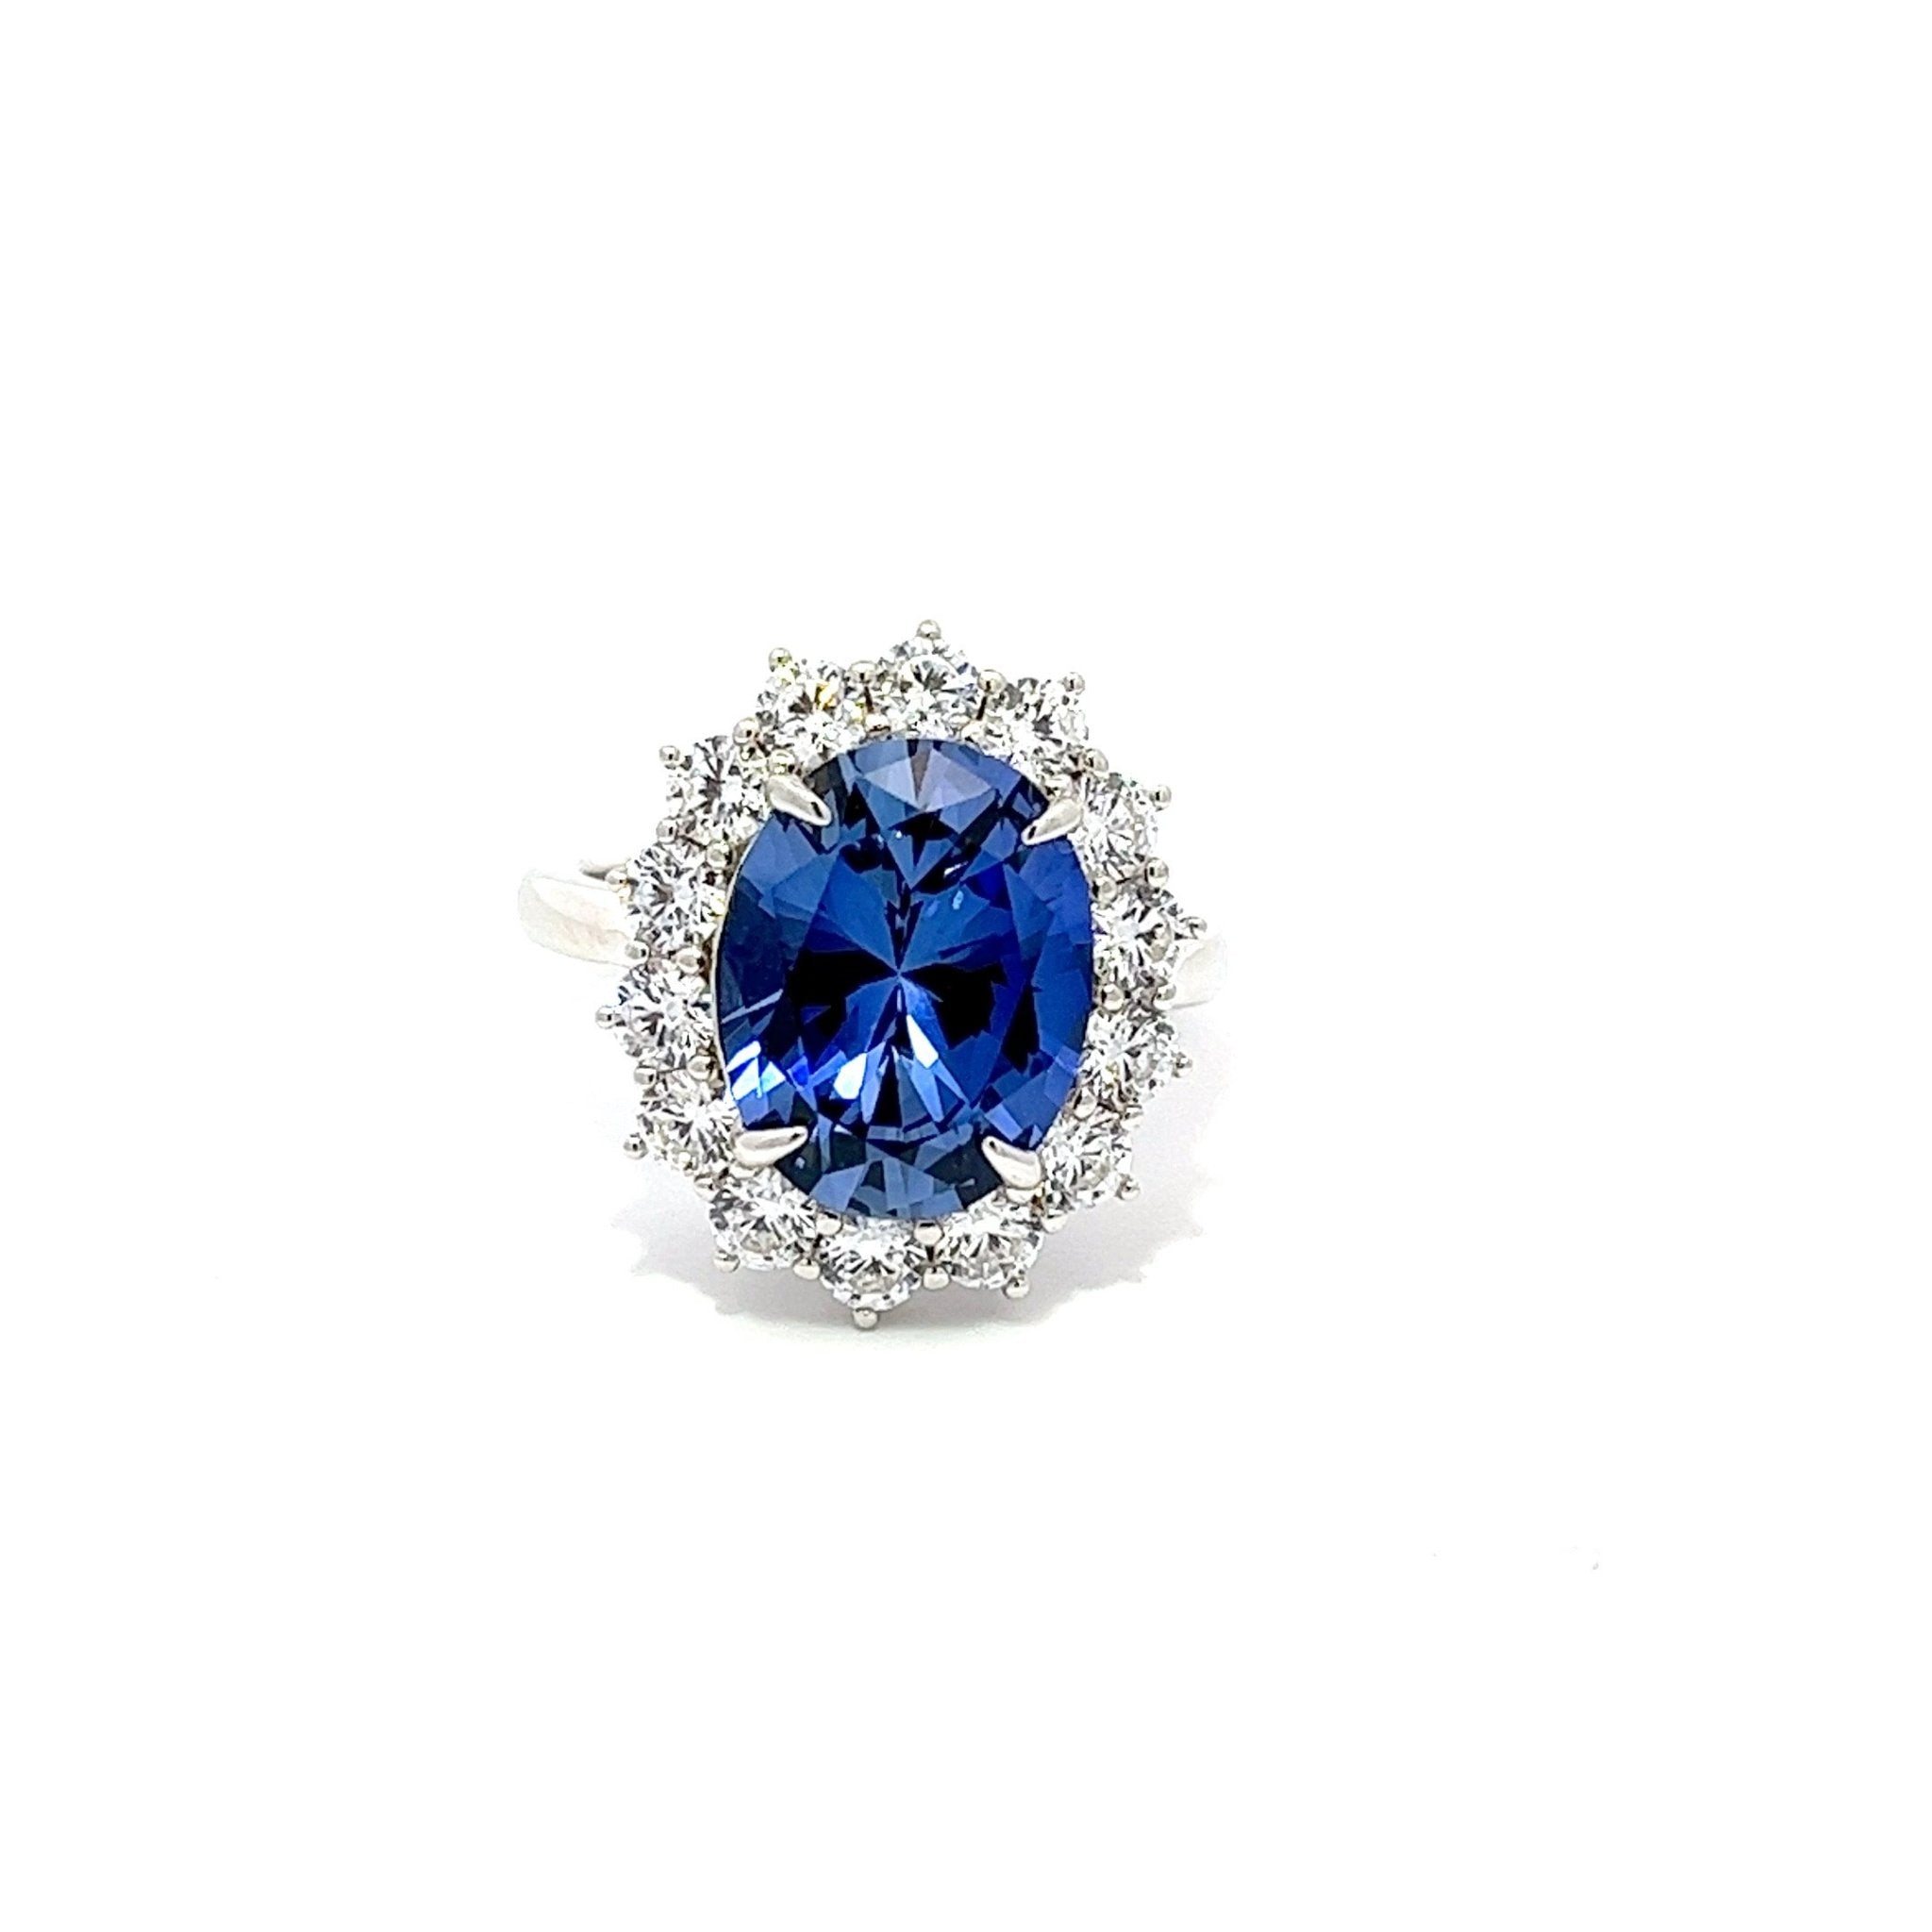 Princess Diana Inspired Engagement Ring by Natkina